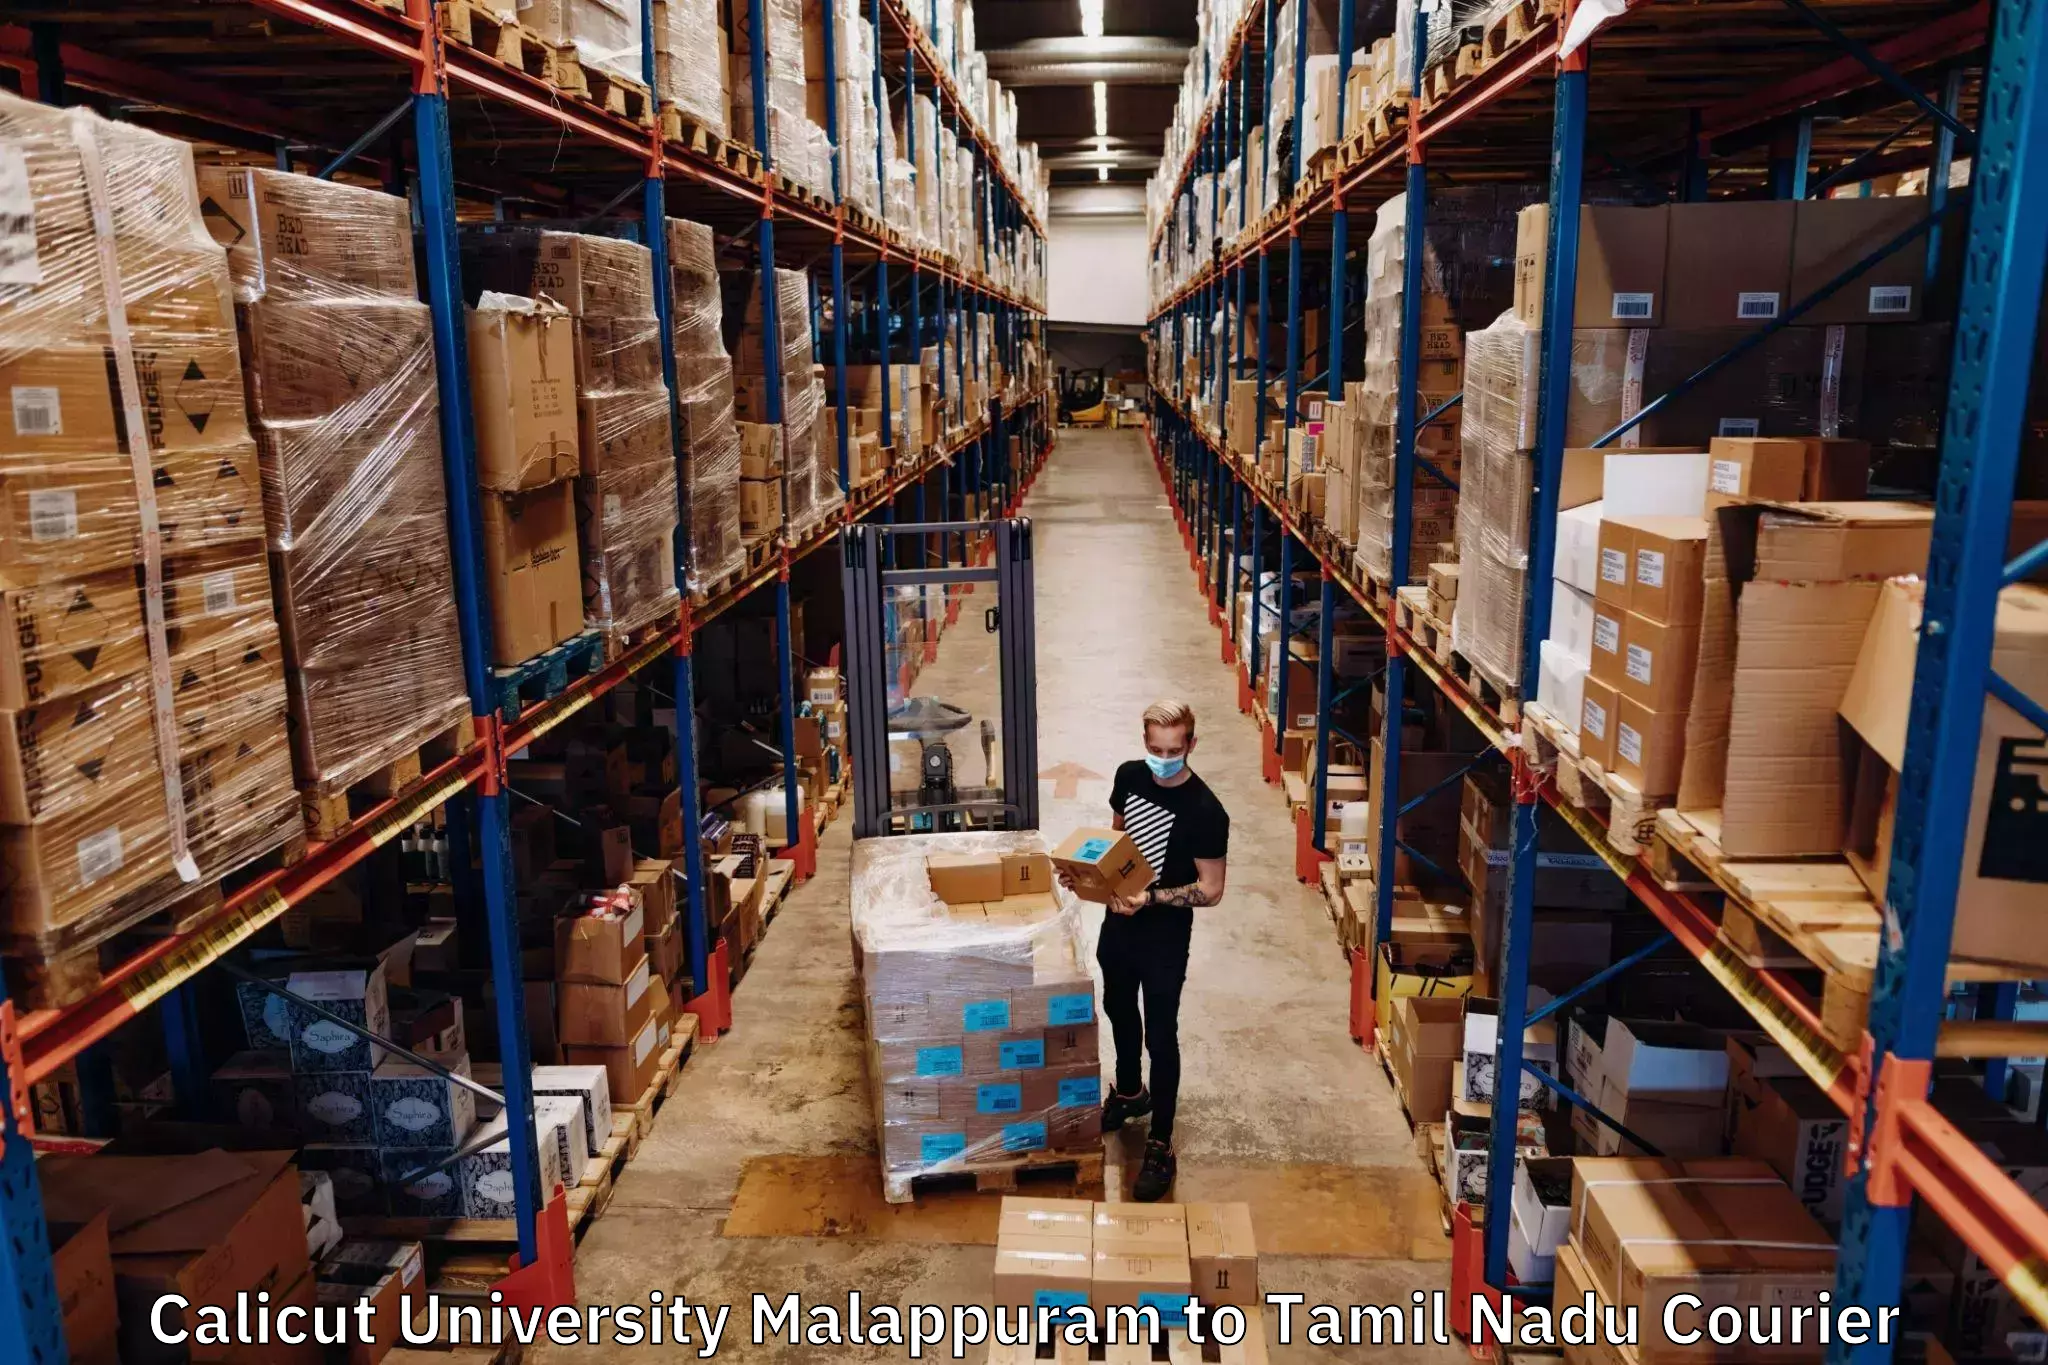 Reliable parcel services Calicut University Malappuram to Tindivanam